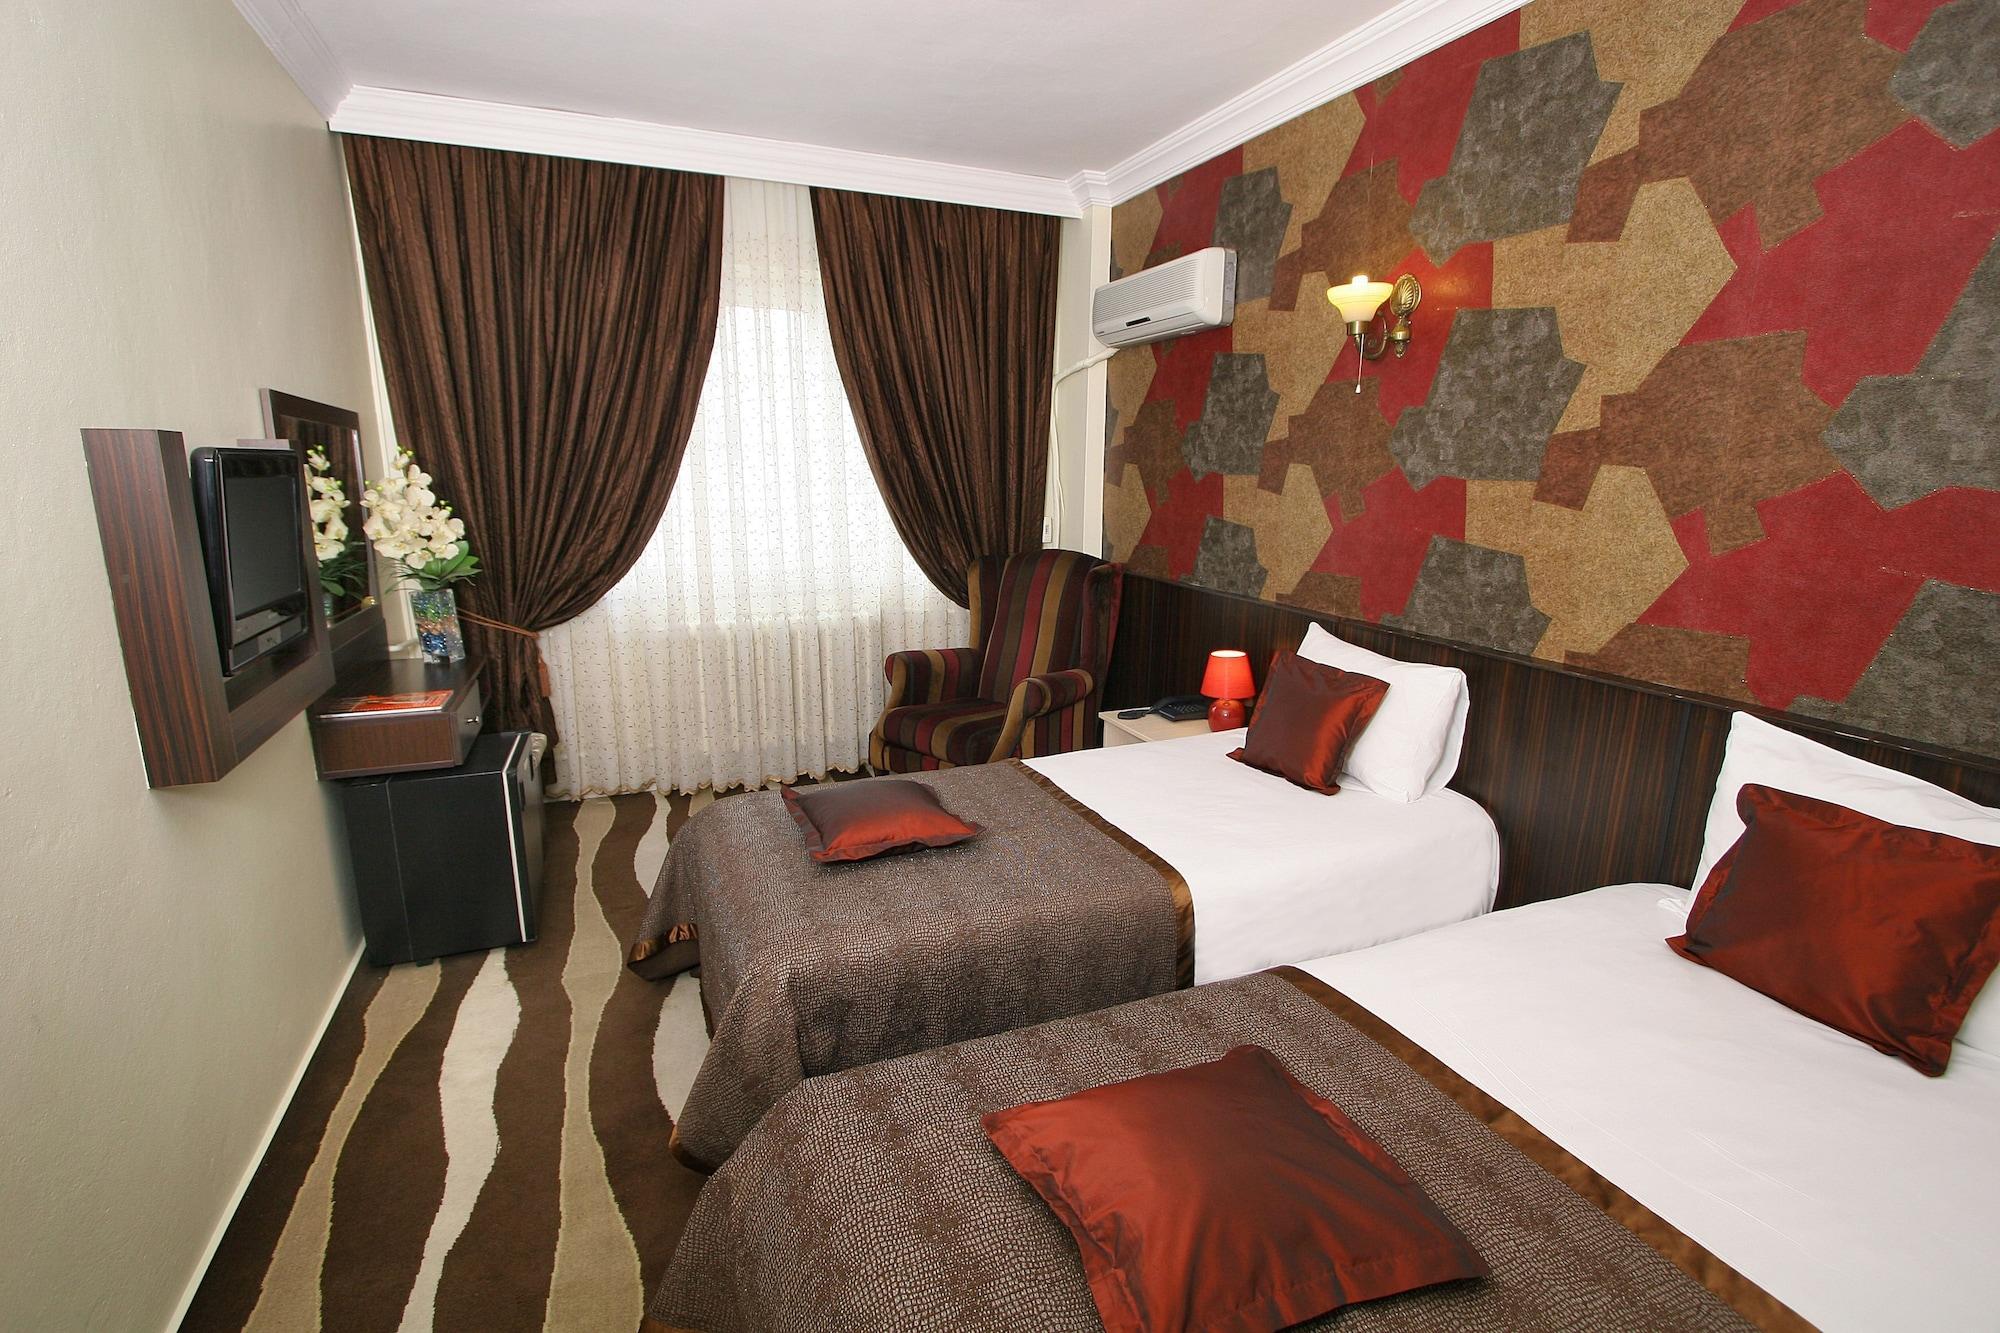 Отель 9 мая. May Hotel Istanbul 3 Турция Лалели Стамбул. Отель Maya. Гостиница май. May Hotel 3*.